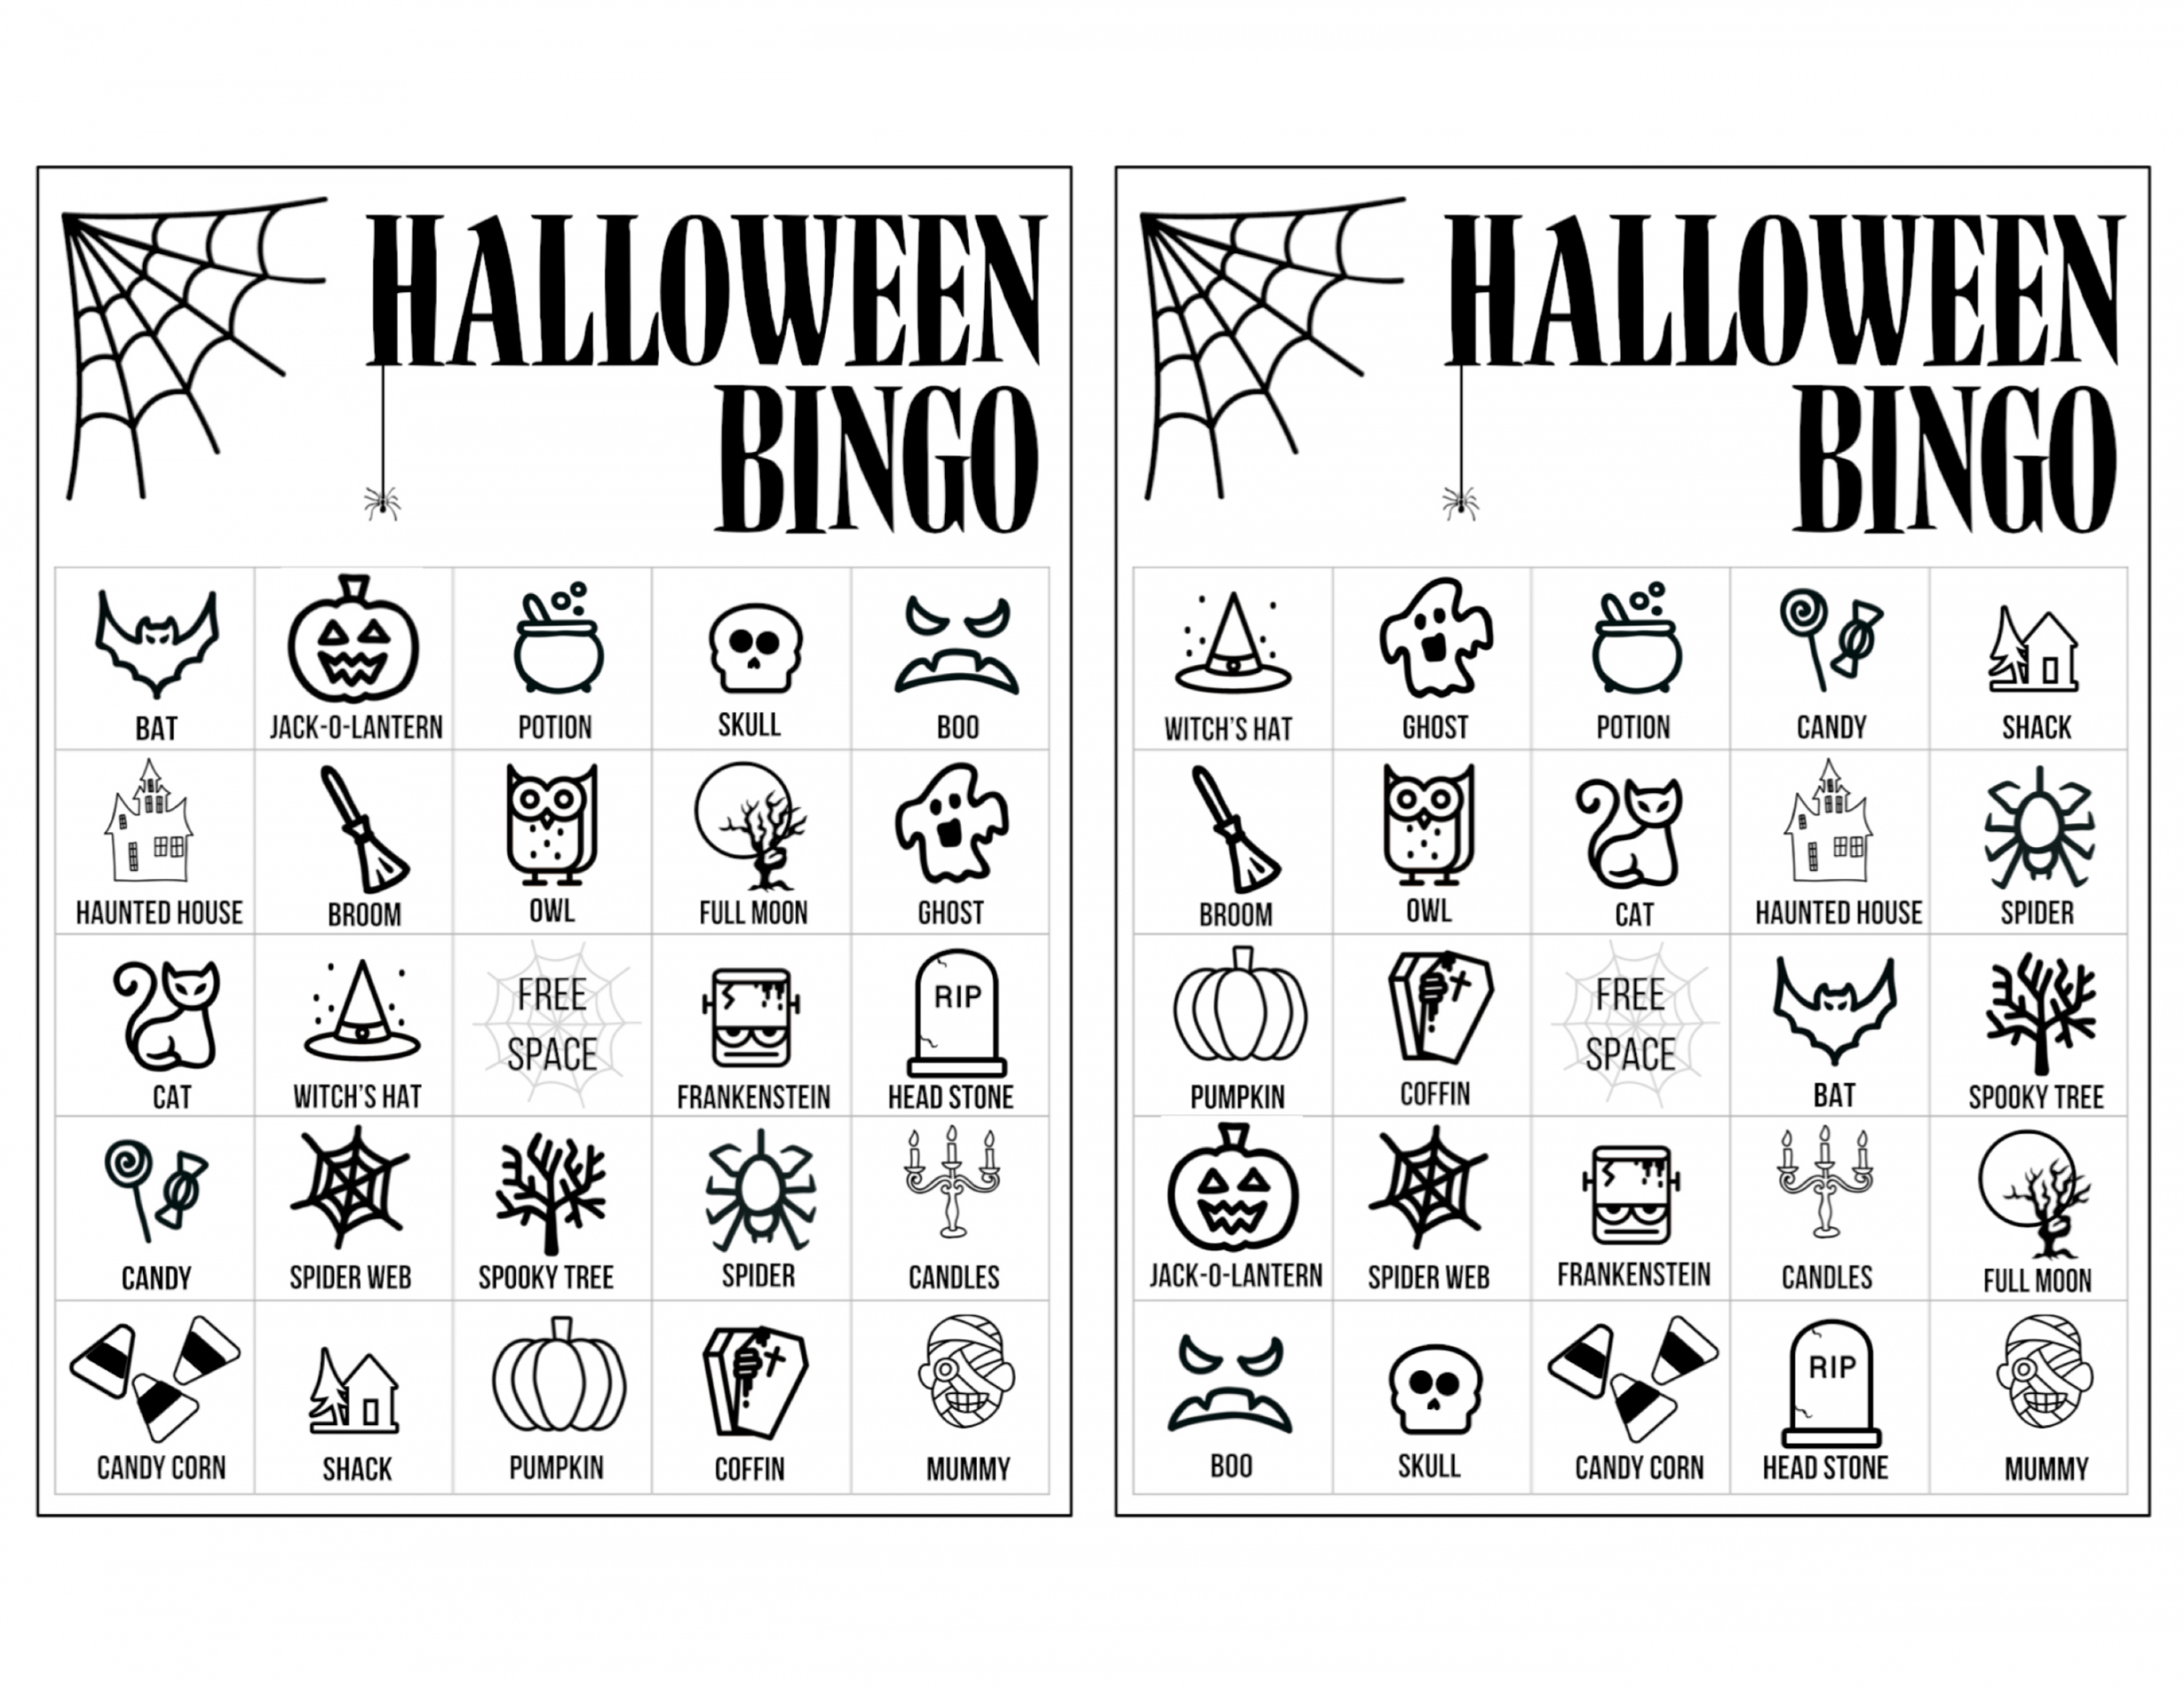 Halloween Bingo Printable Free - Printable - Halloween Bingo Printable Game Cards Template - Paper Trail Design